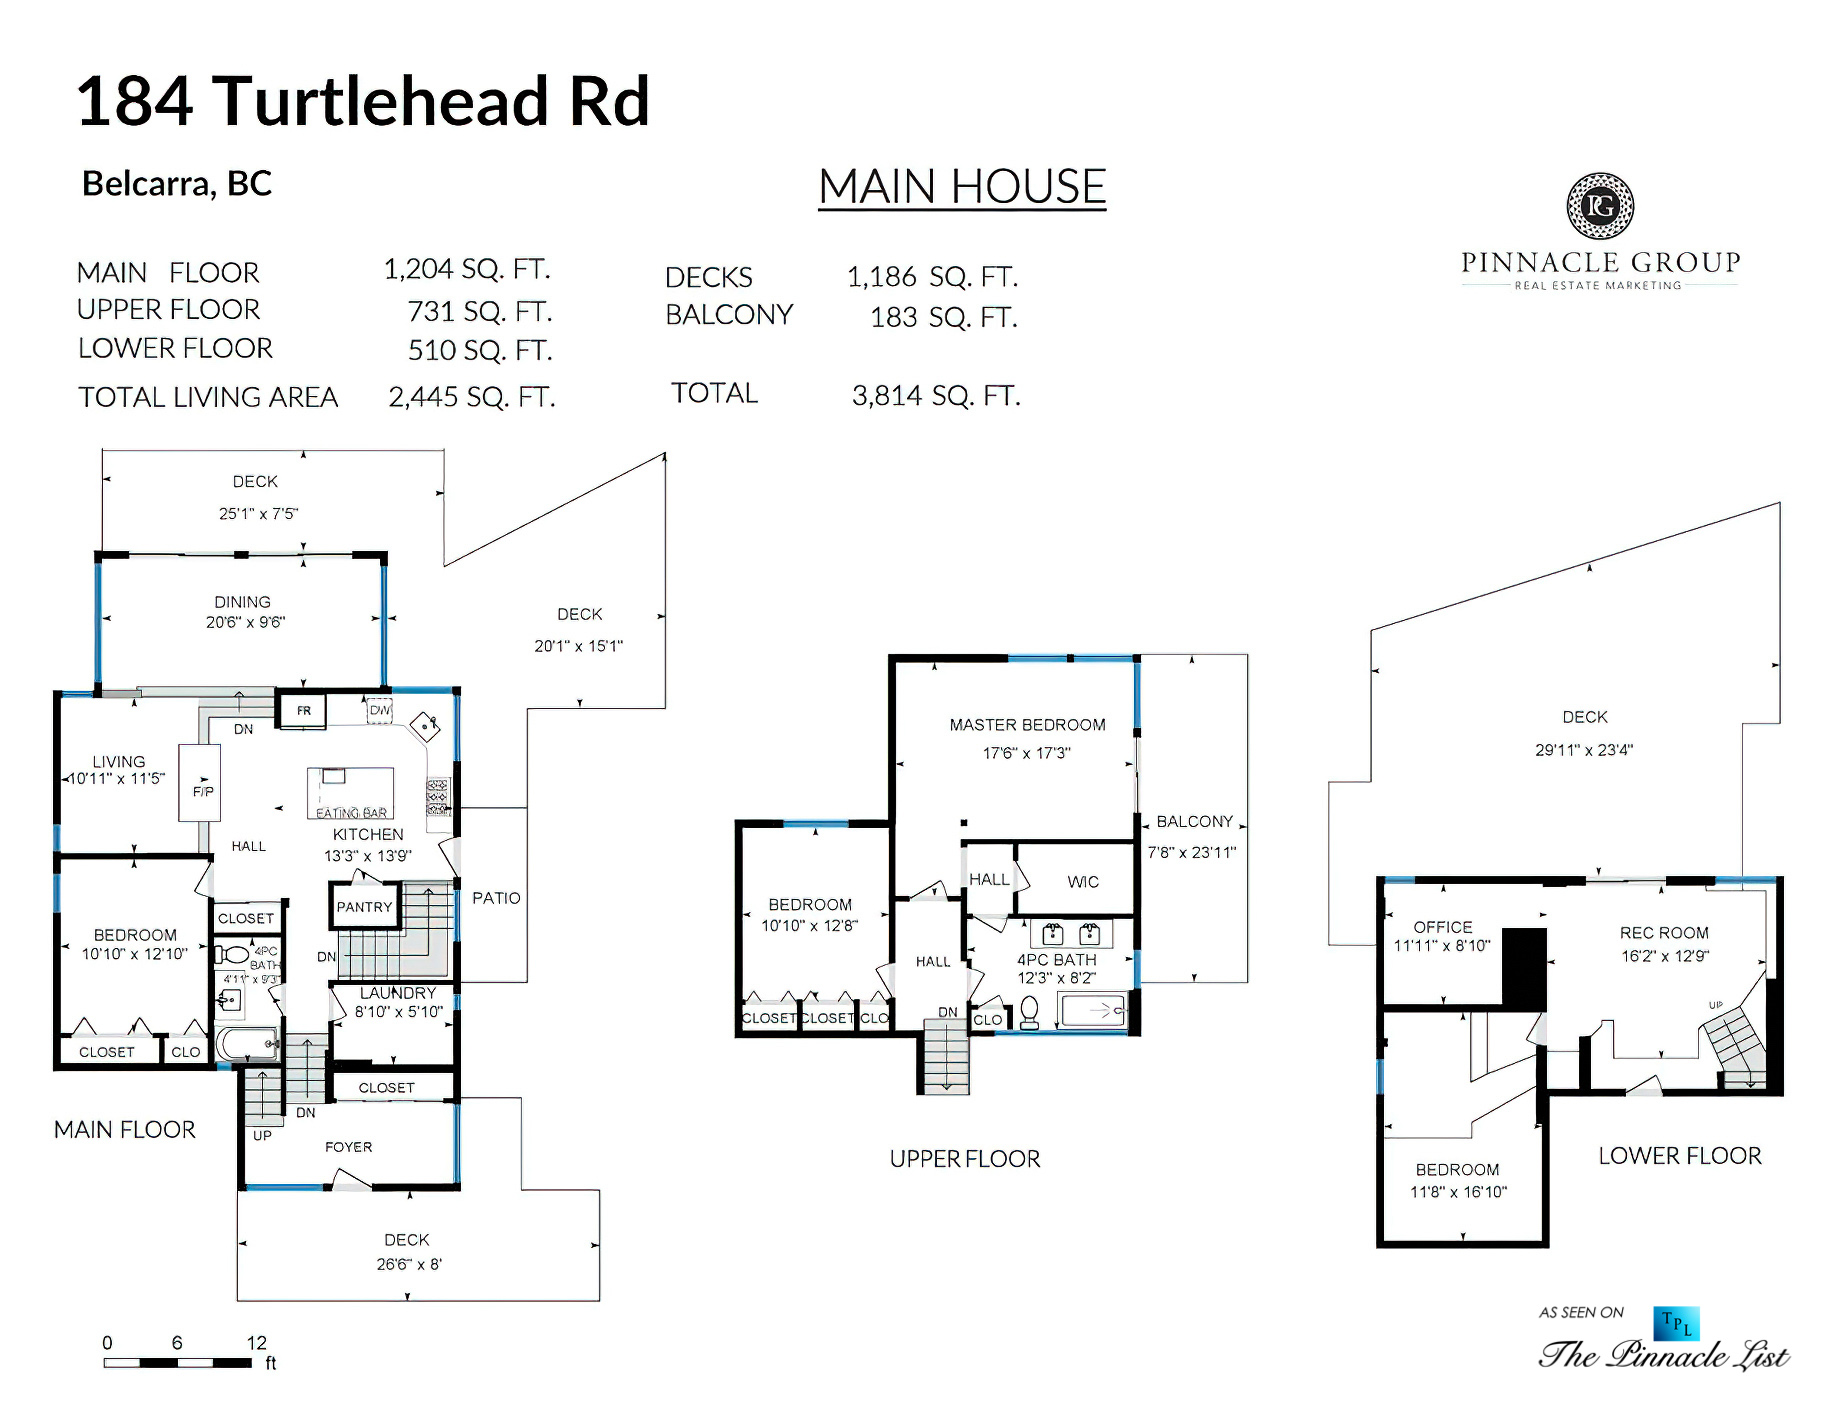 184 Turtlehead Rd, Belcarra, BC, Canada - Floor Plans